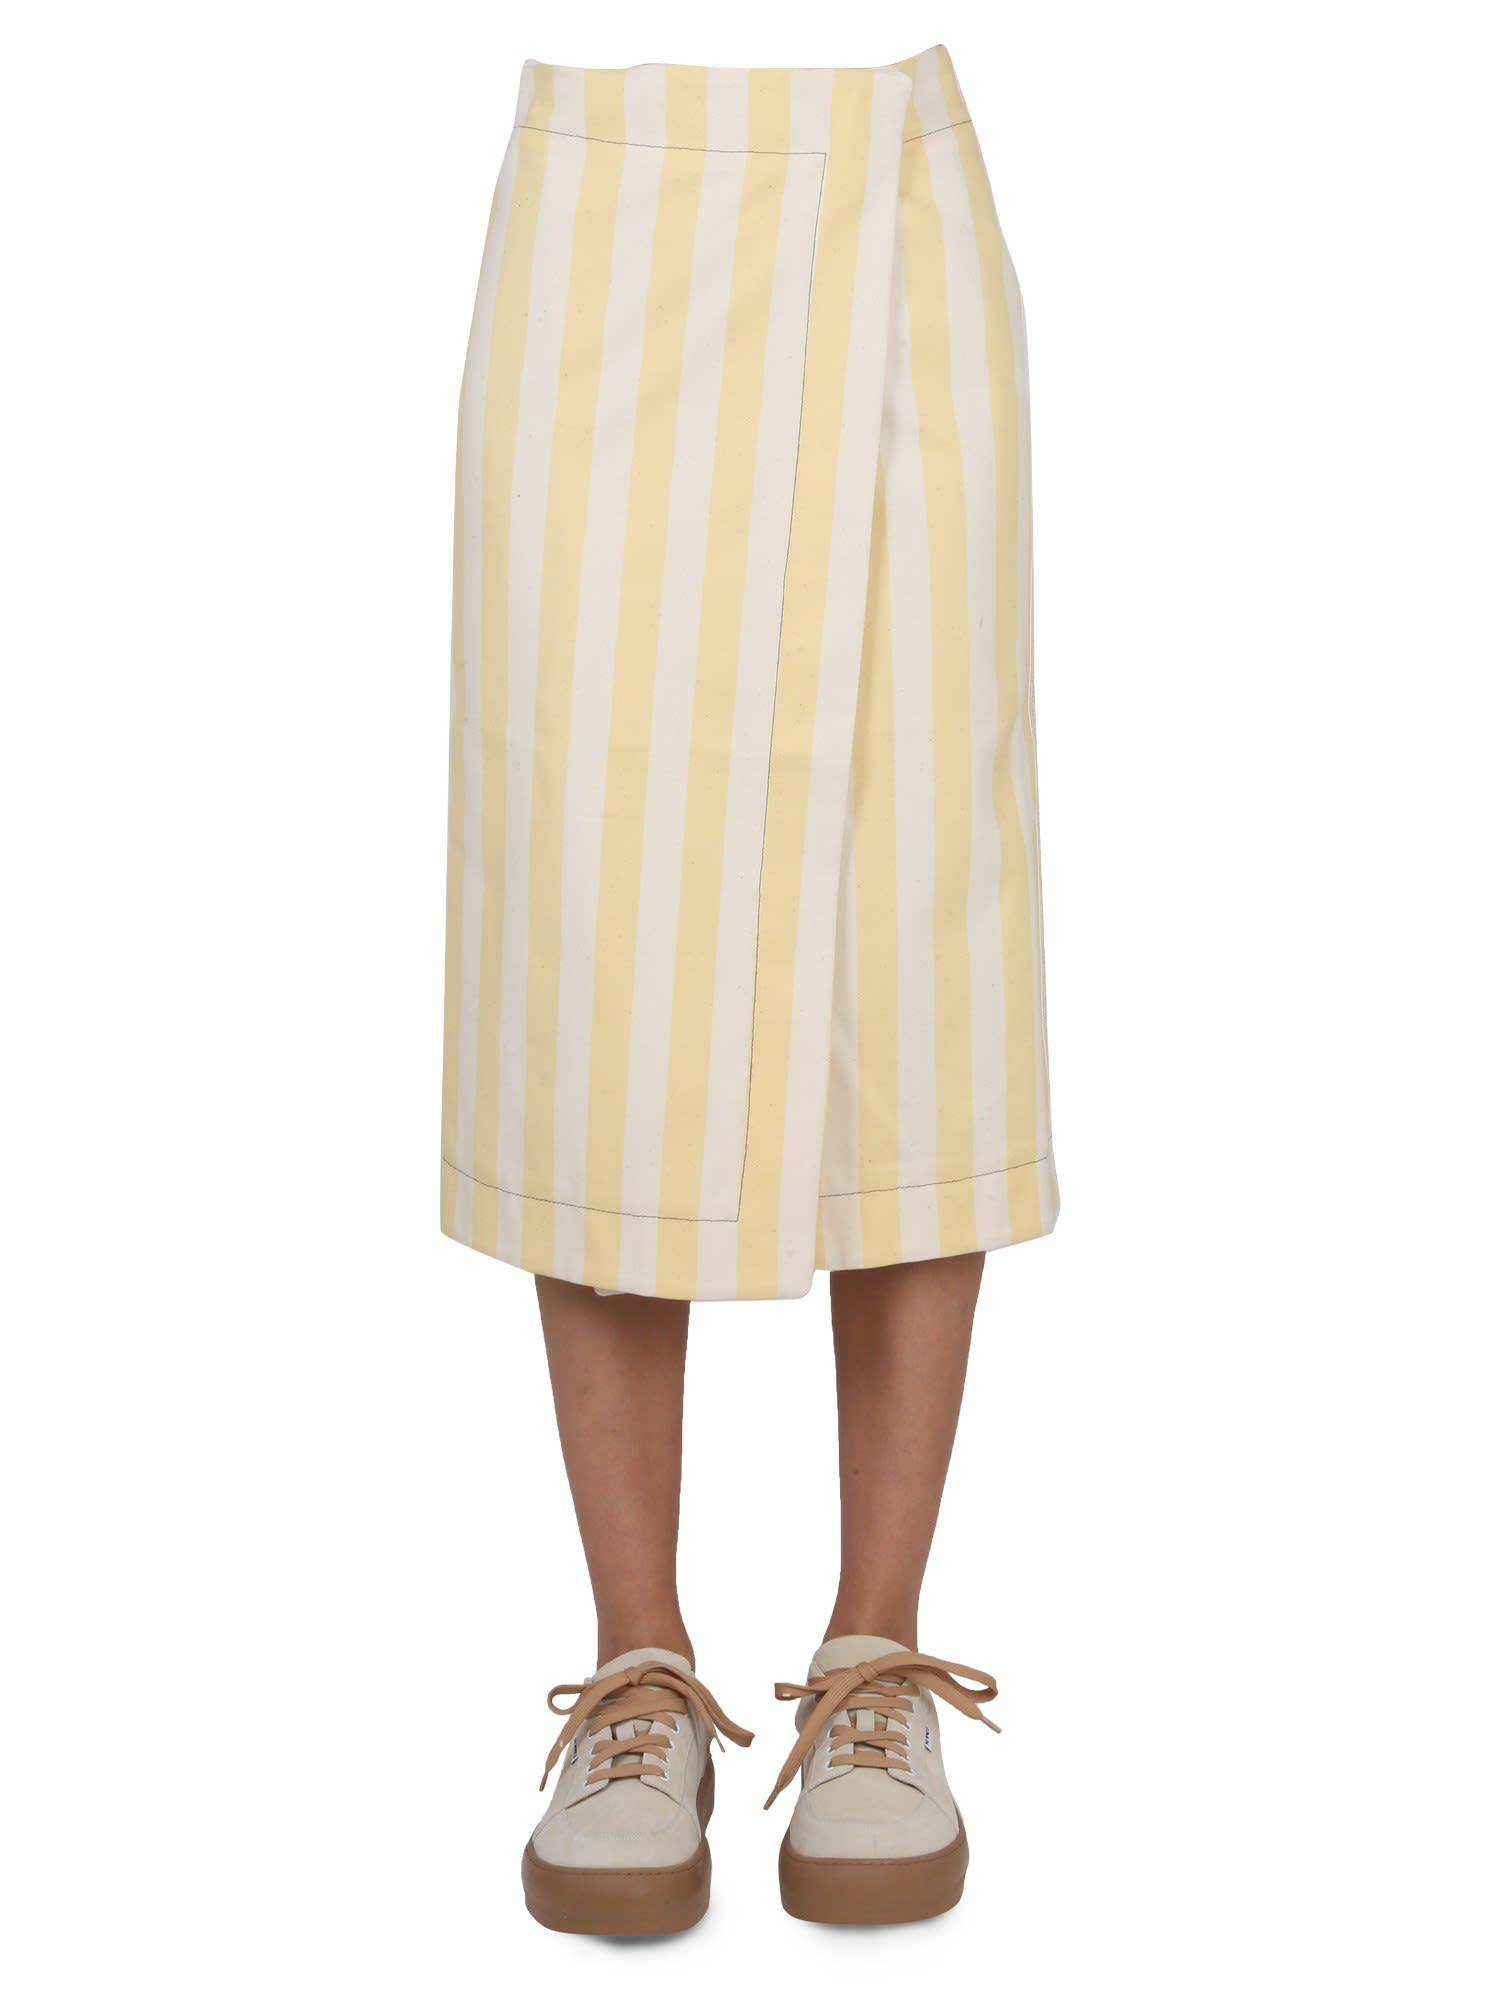 Sunnei Striped Pattern Skirt